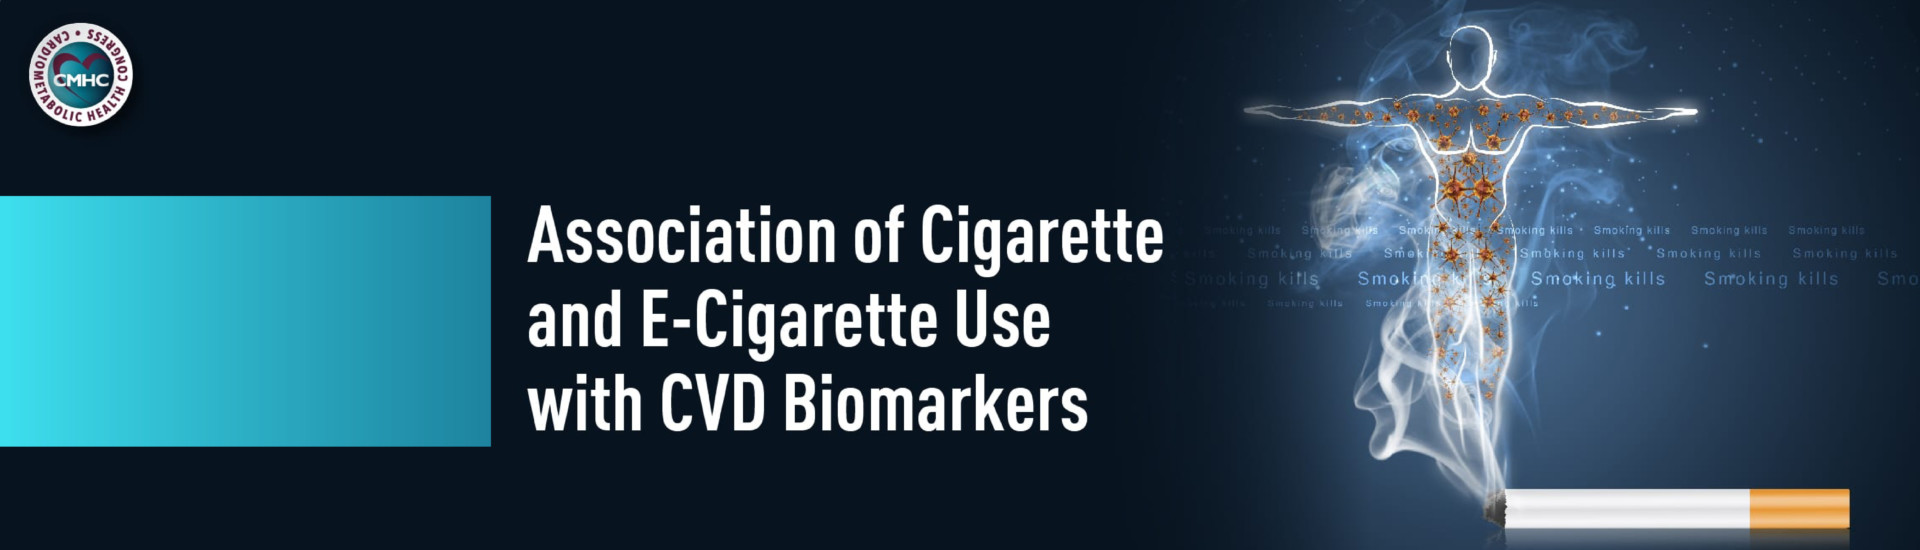 CHMC ASSOCIATION OF CIGARETTE AND E-CIGARETTE USE WITH CVD BIOMARKERS